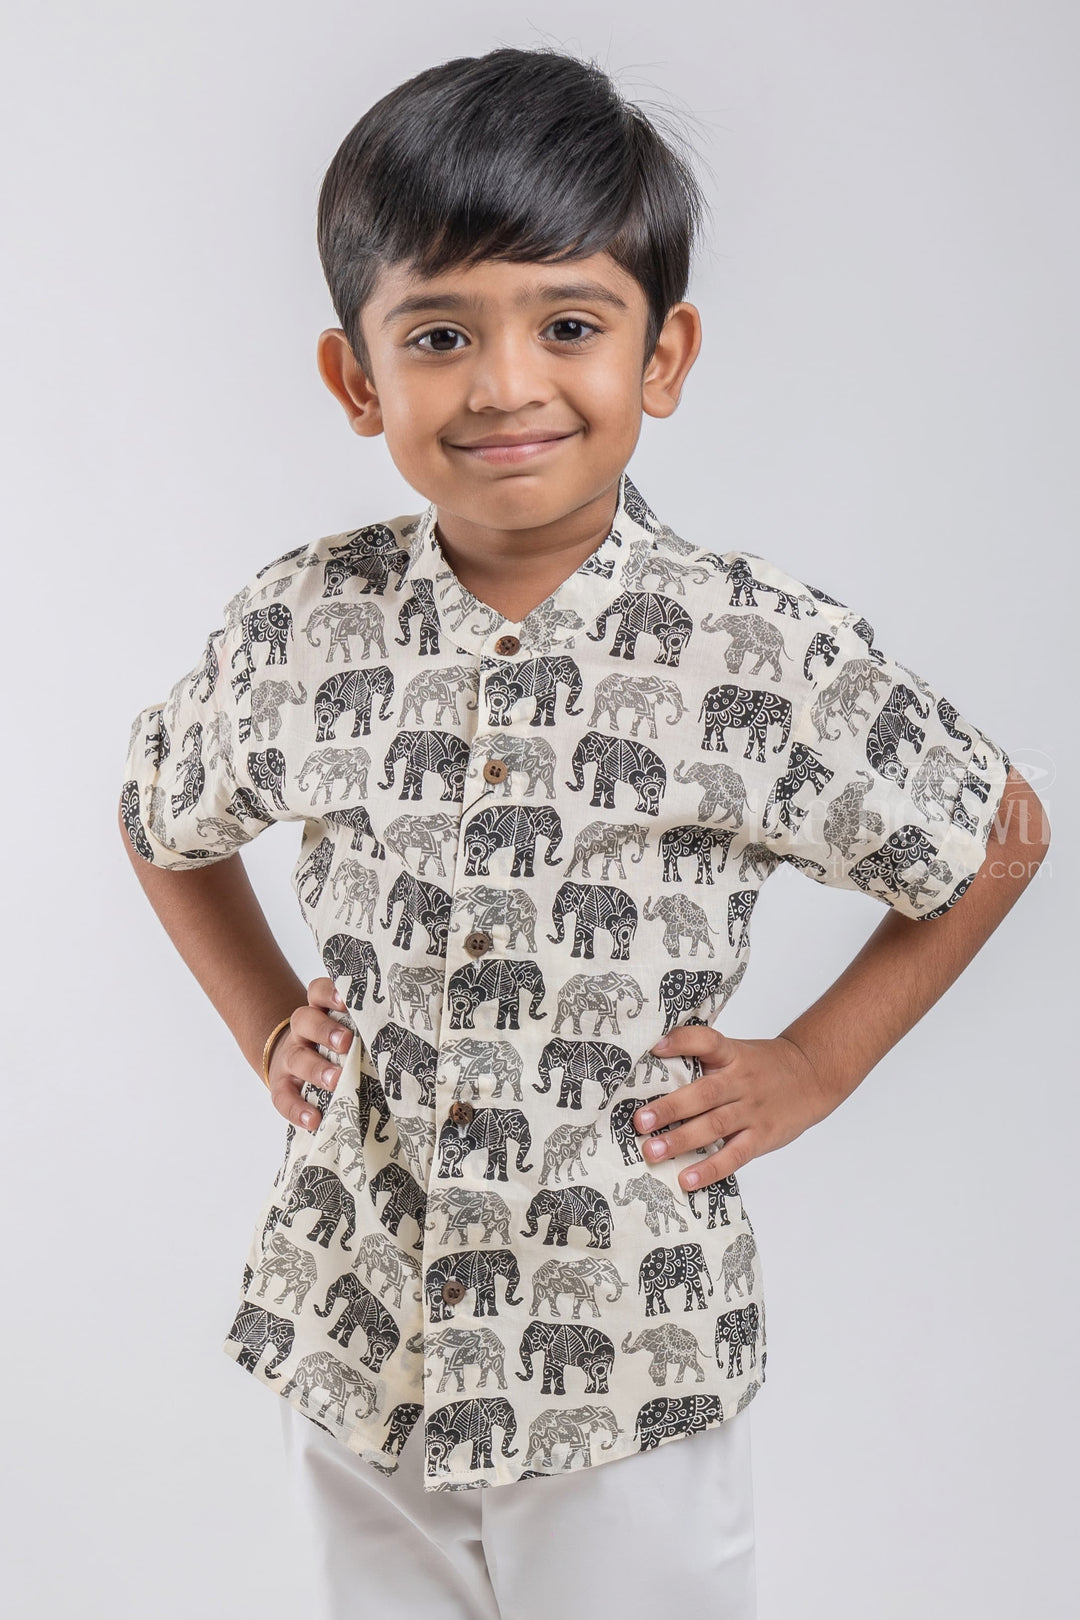 The Nesavu Boys Cotton Shirt Boys' Fashion with an Elephant Twist | Mul Cotton | Nesavu | Cute and Quirky Kids' Clothing psr silks Nesavu 14 (6M) / Half White / Cotton BS040A